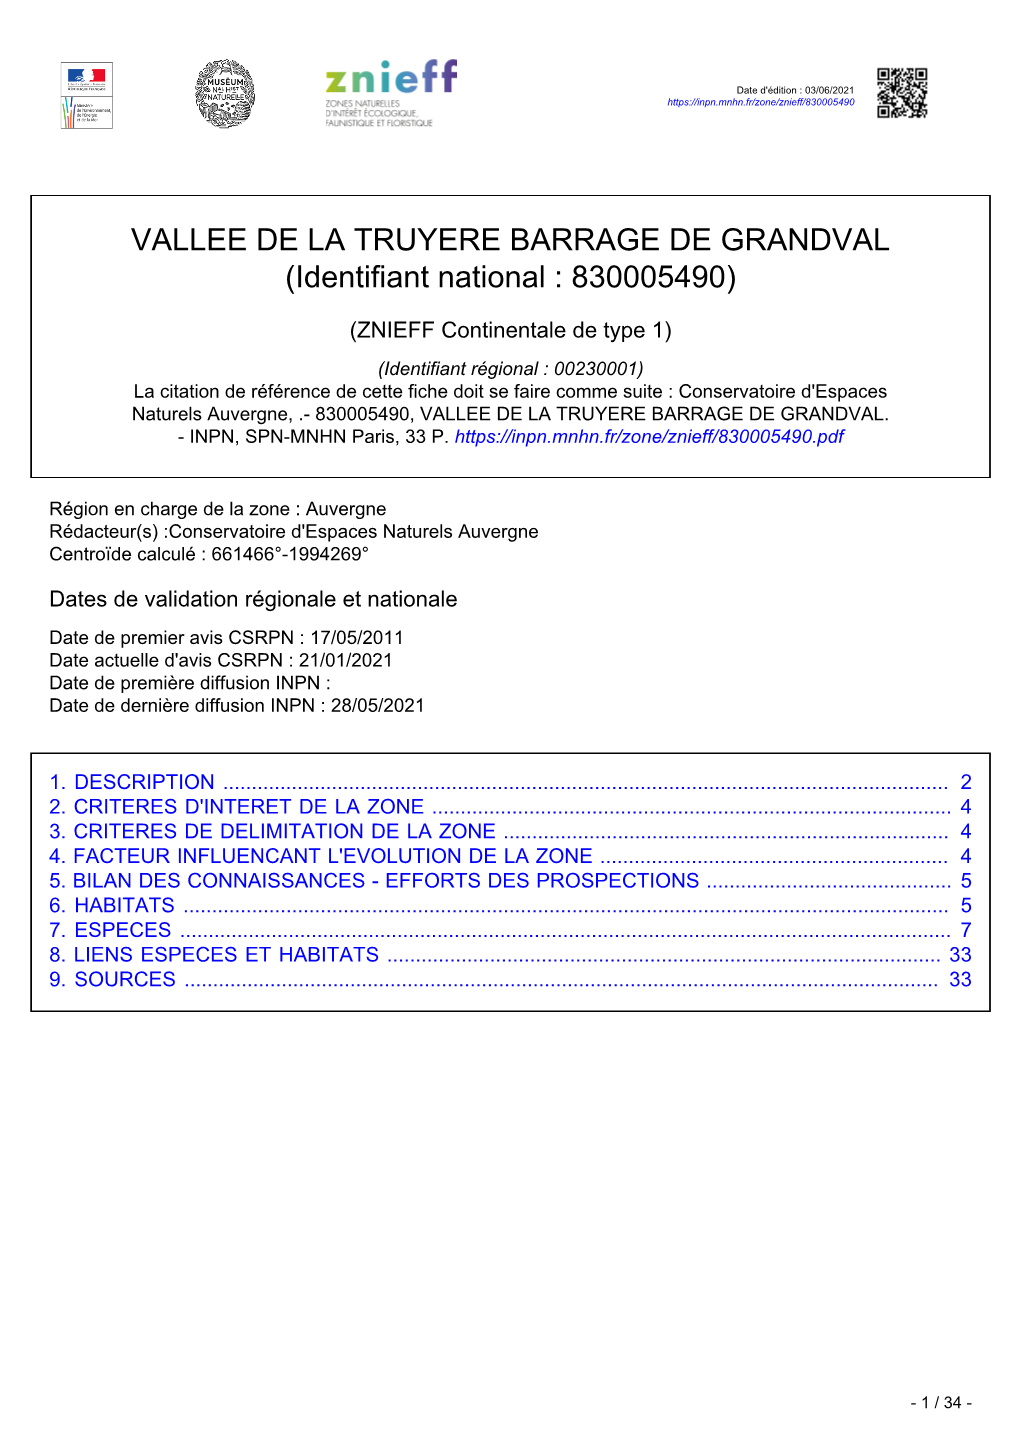 VALLEE DE LA TRUYERE BARRAGE DE GRANDVAL (Identifiant National : 830005490)